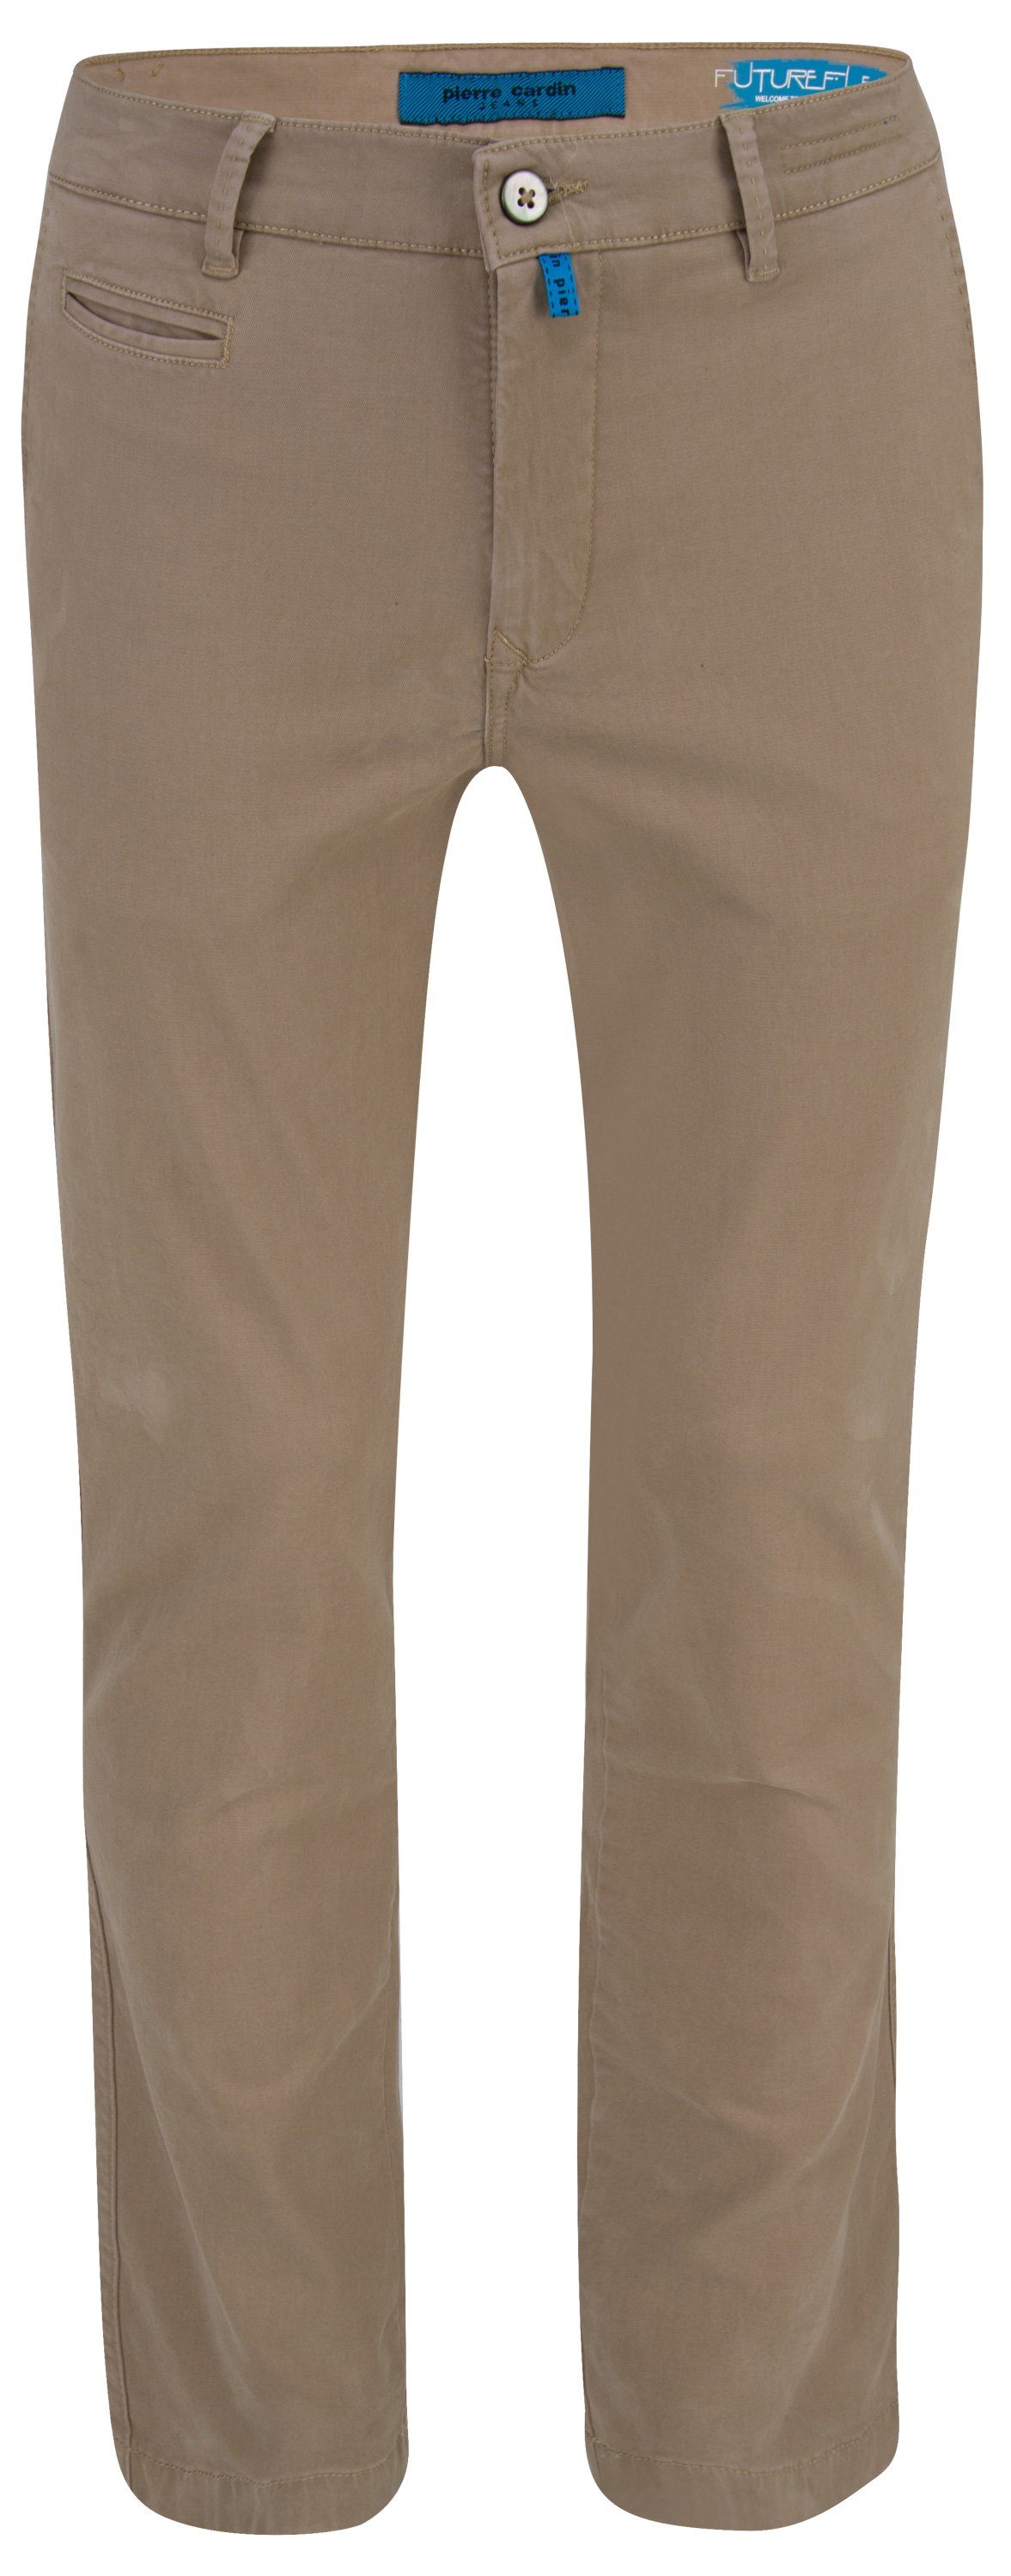 Pierre Cardin 5-Pocket-Jeans »PIERRE CARDIN FUTUREFLEX LYON beige 33757  2233.25« online kaufen | OTTO